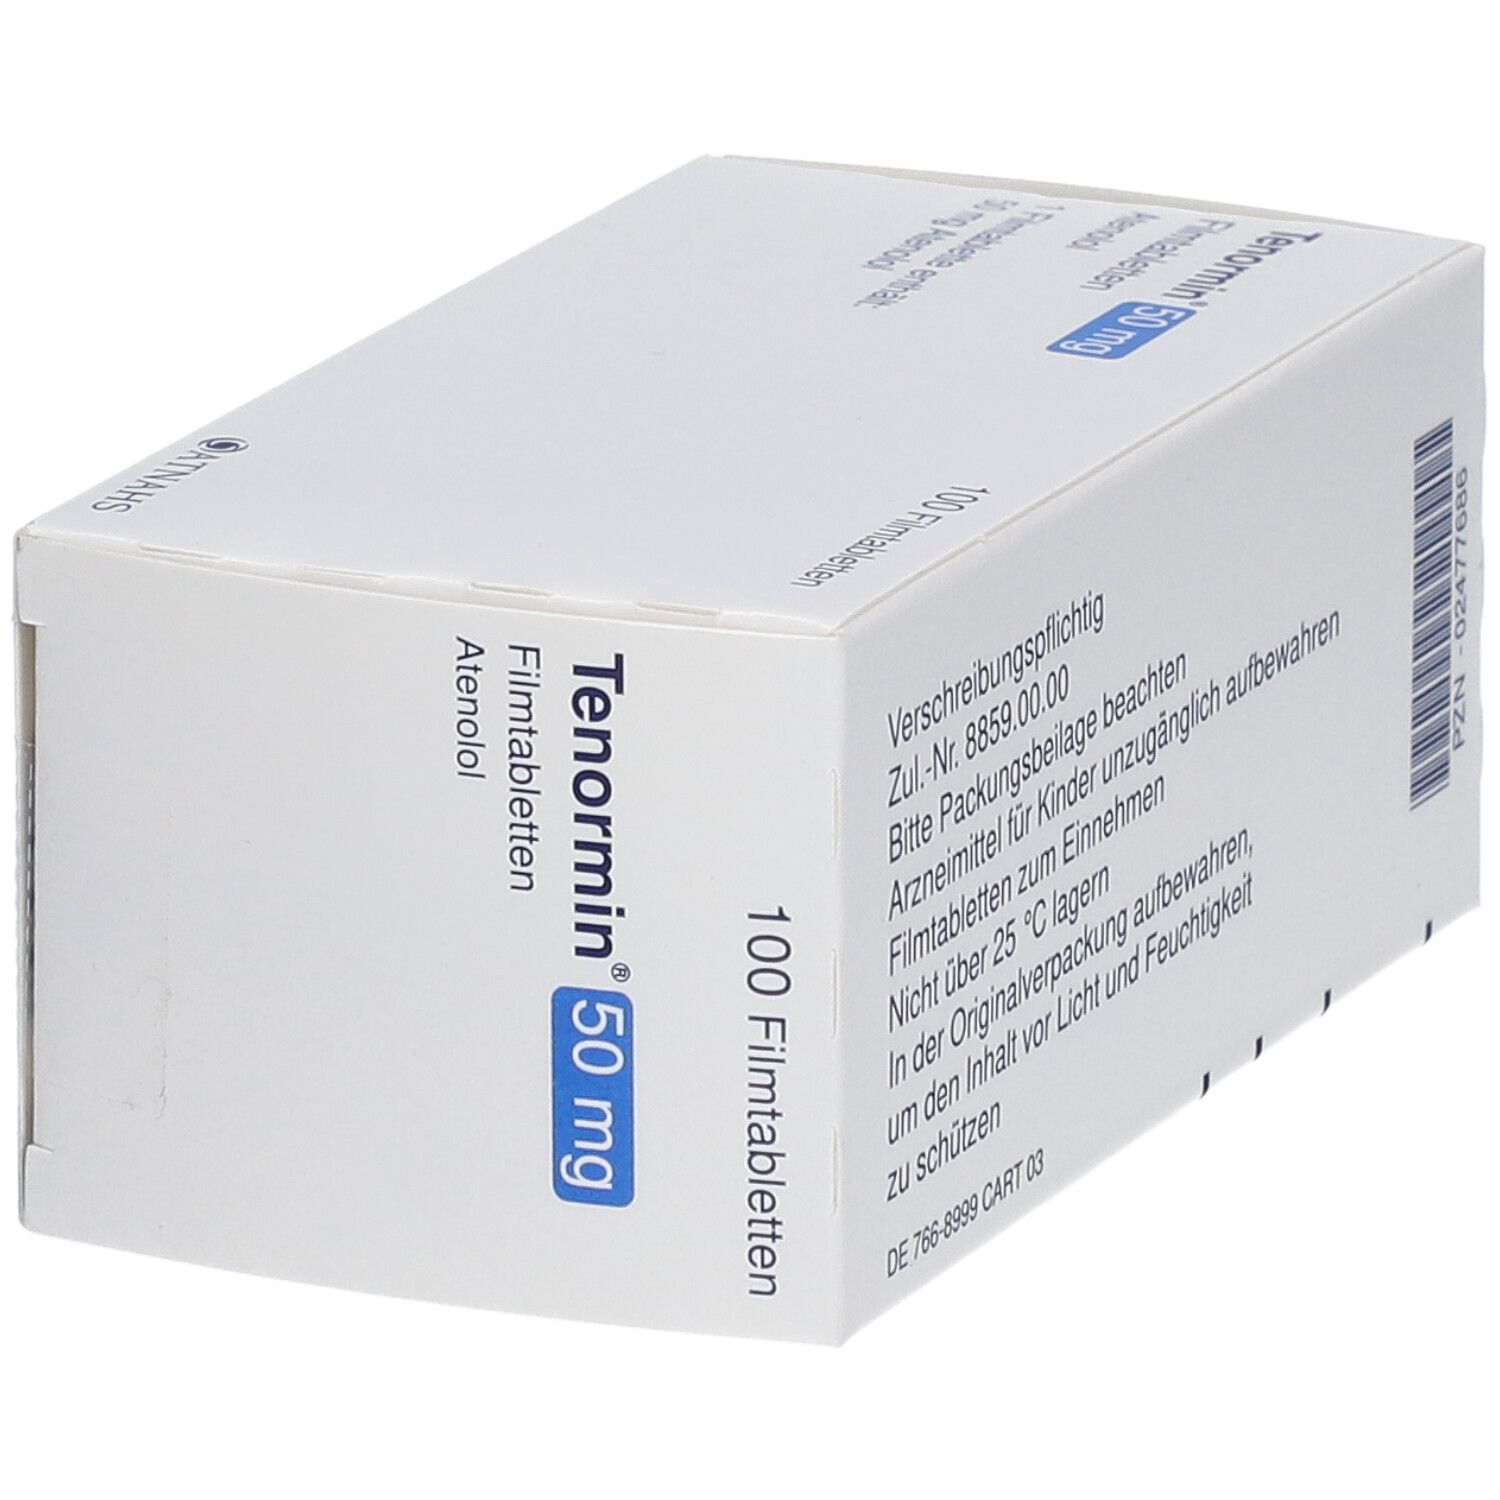 Tenormin® 50 mg